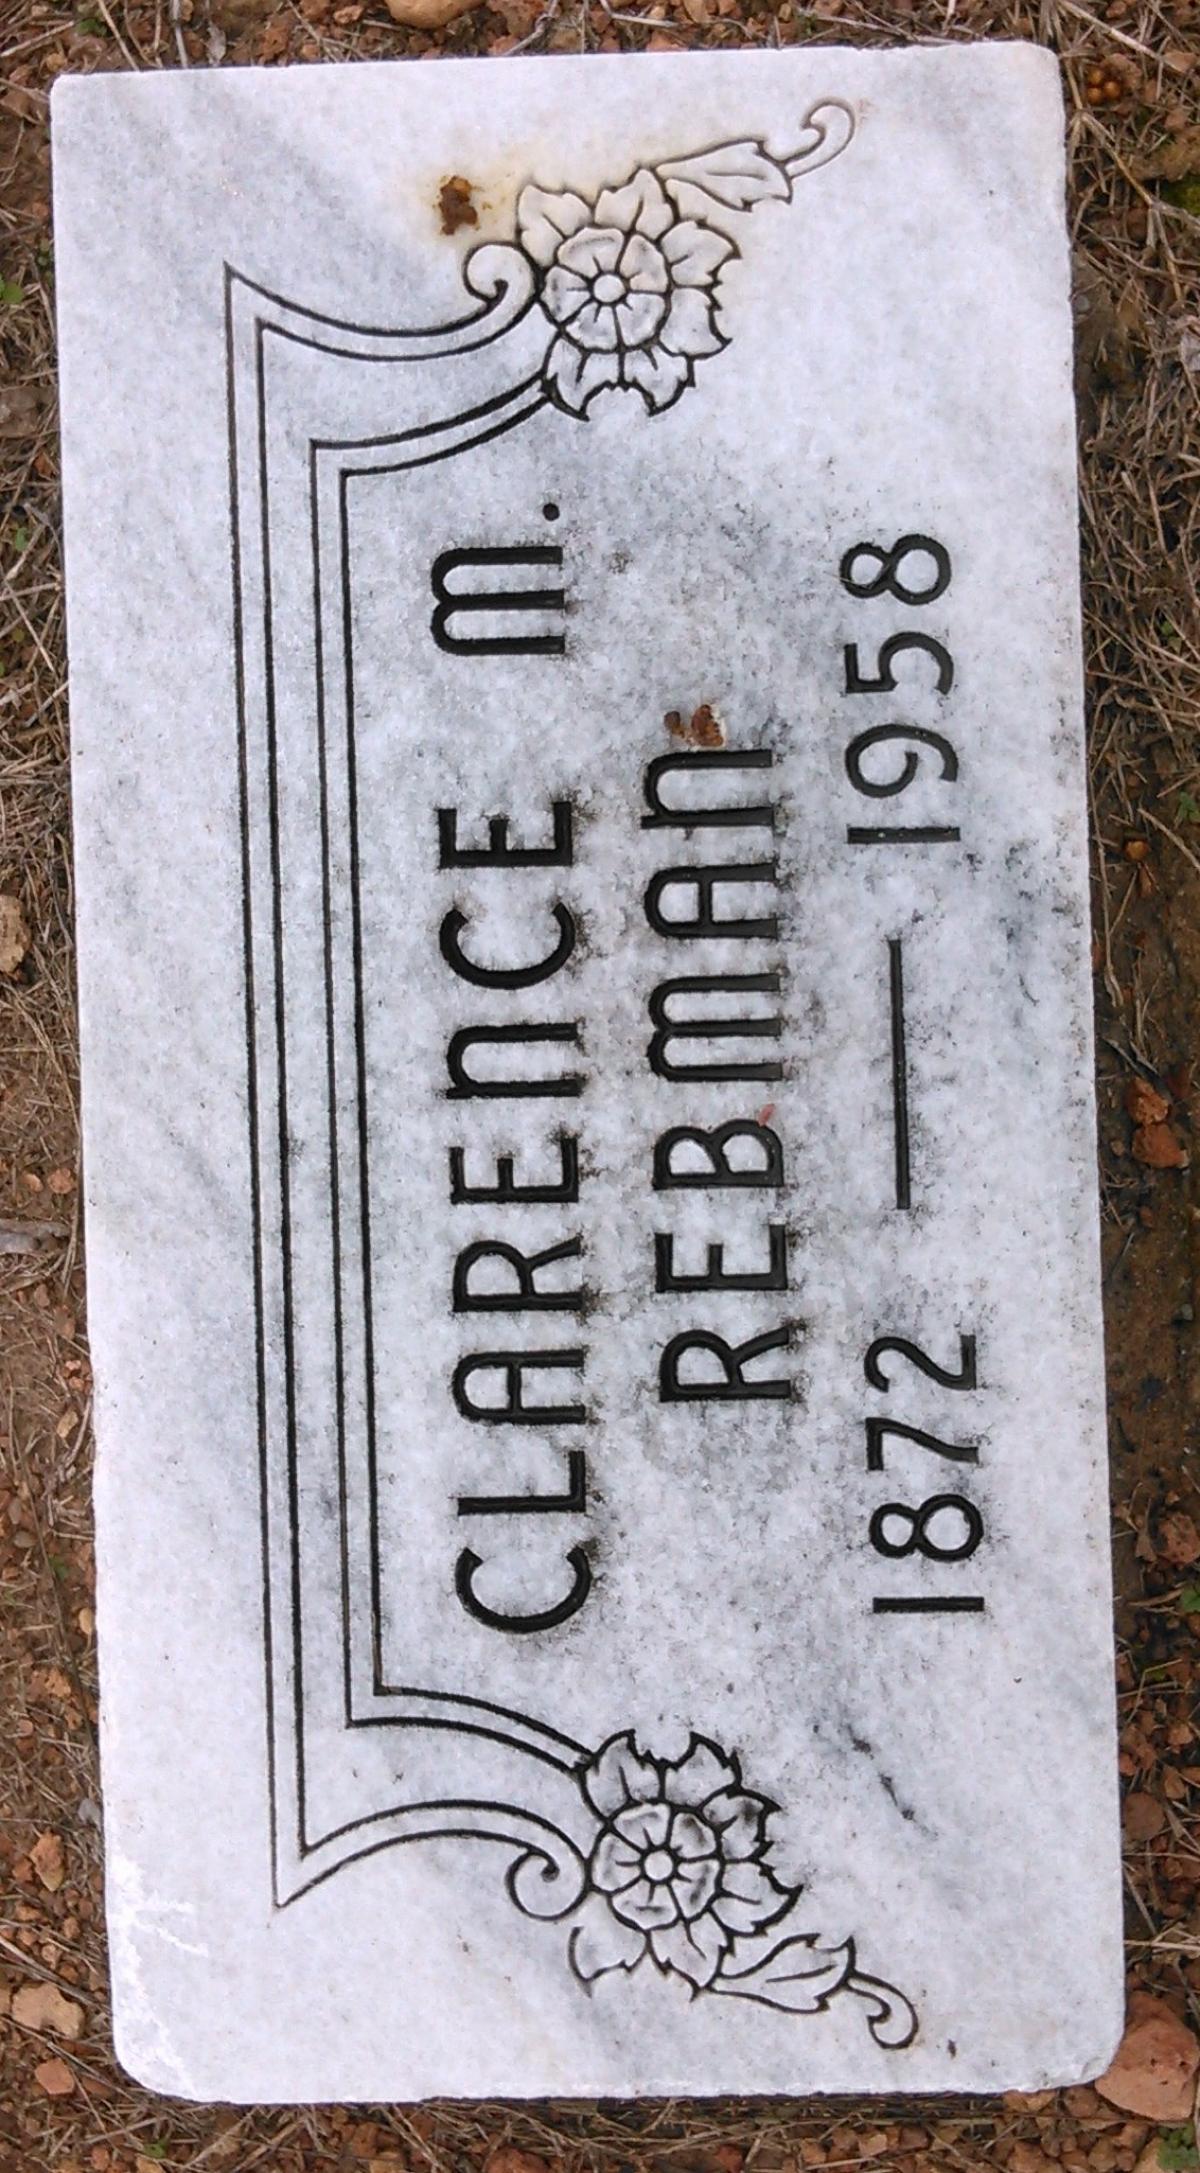 OK, Grove, Olympus Cemetery, Rebman, Clarence M. Headstone